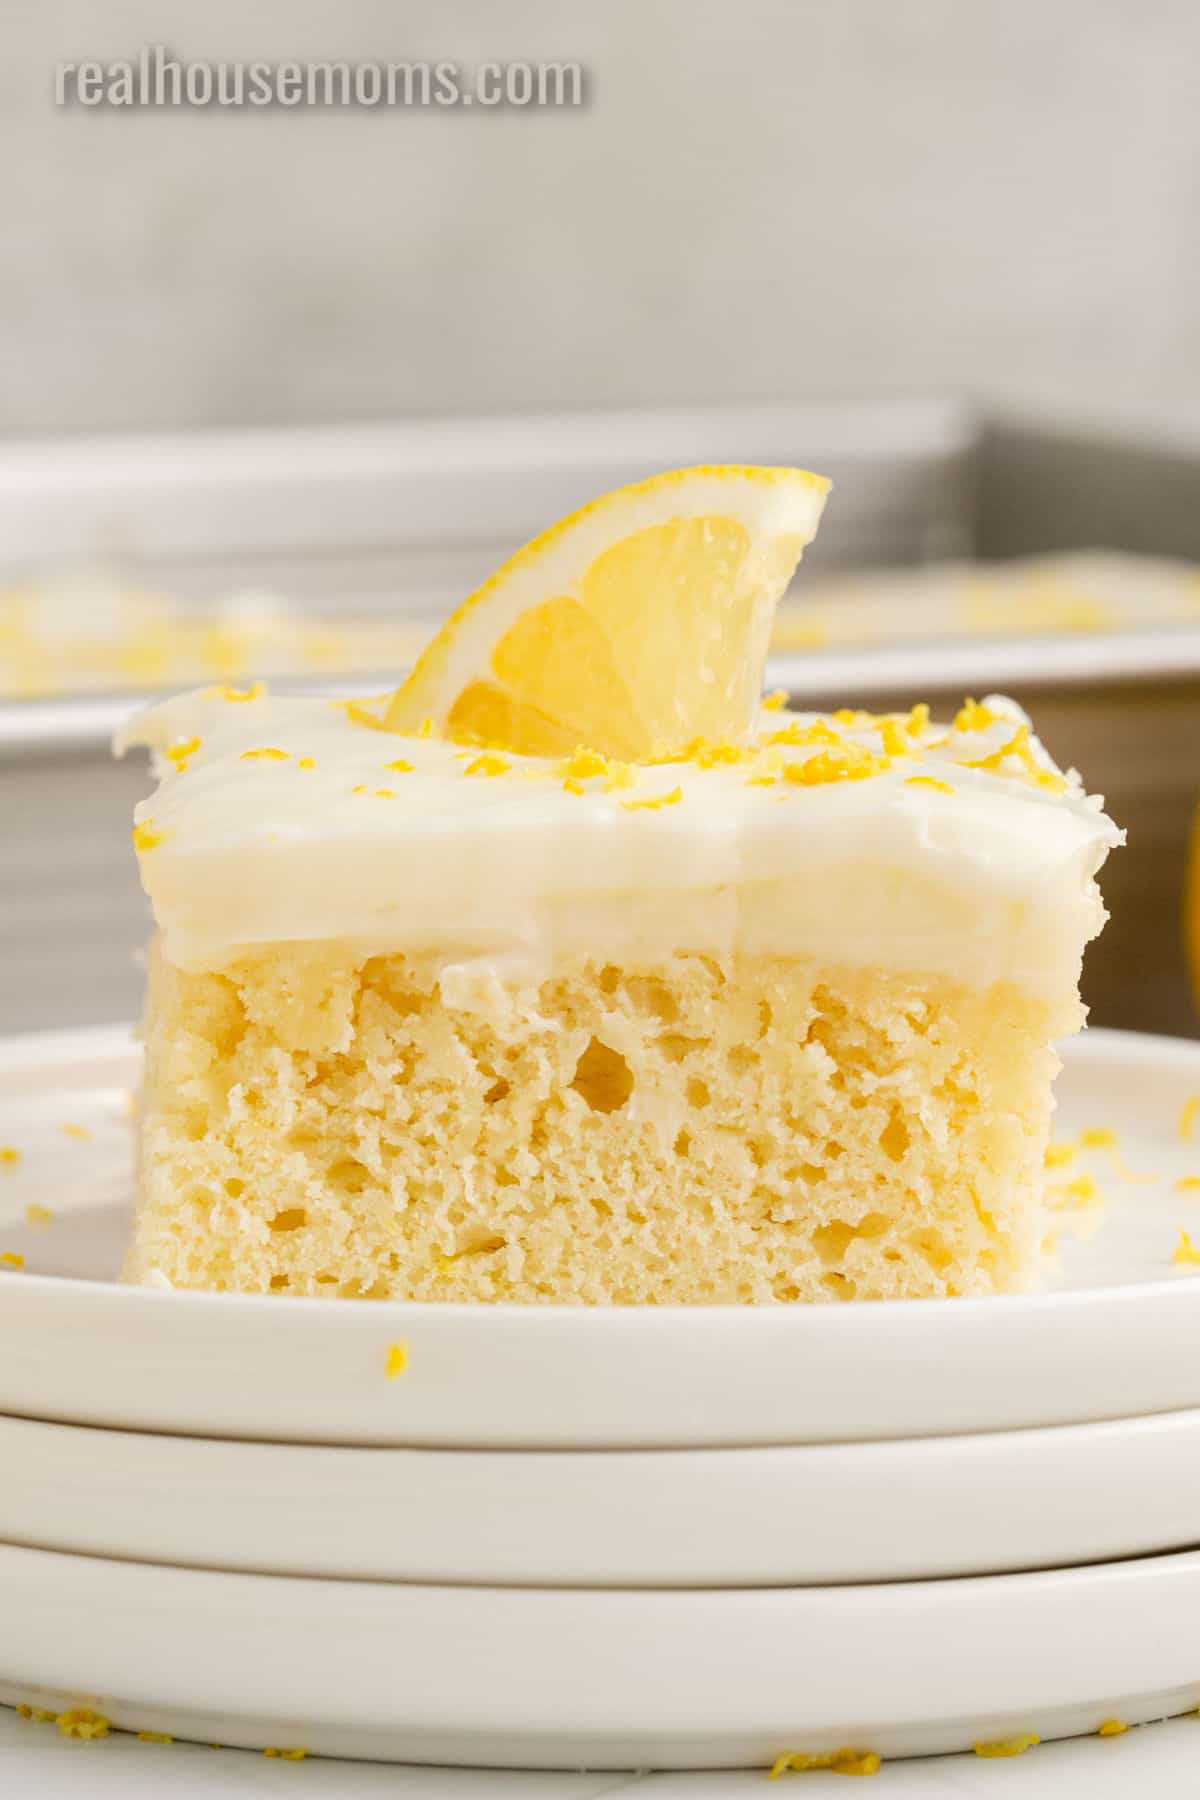 side view of lemon poke cake topped with lemon zest and a quarter slice of lemon